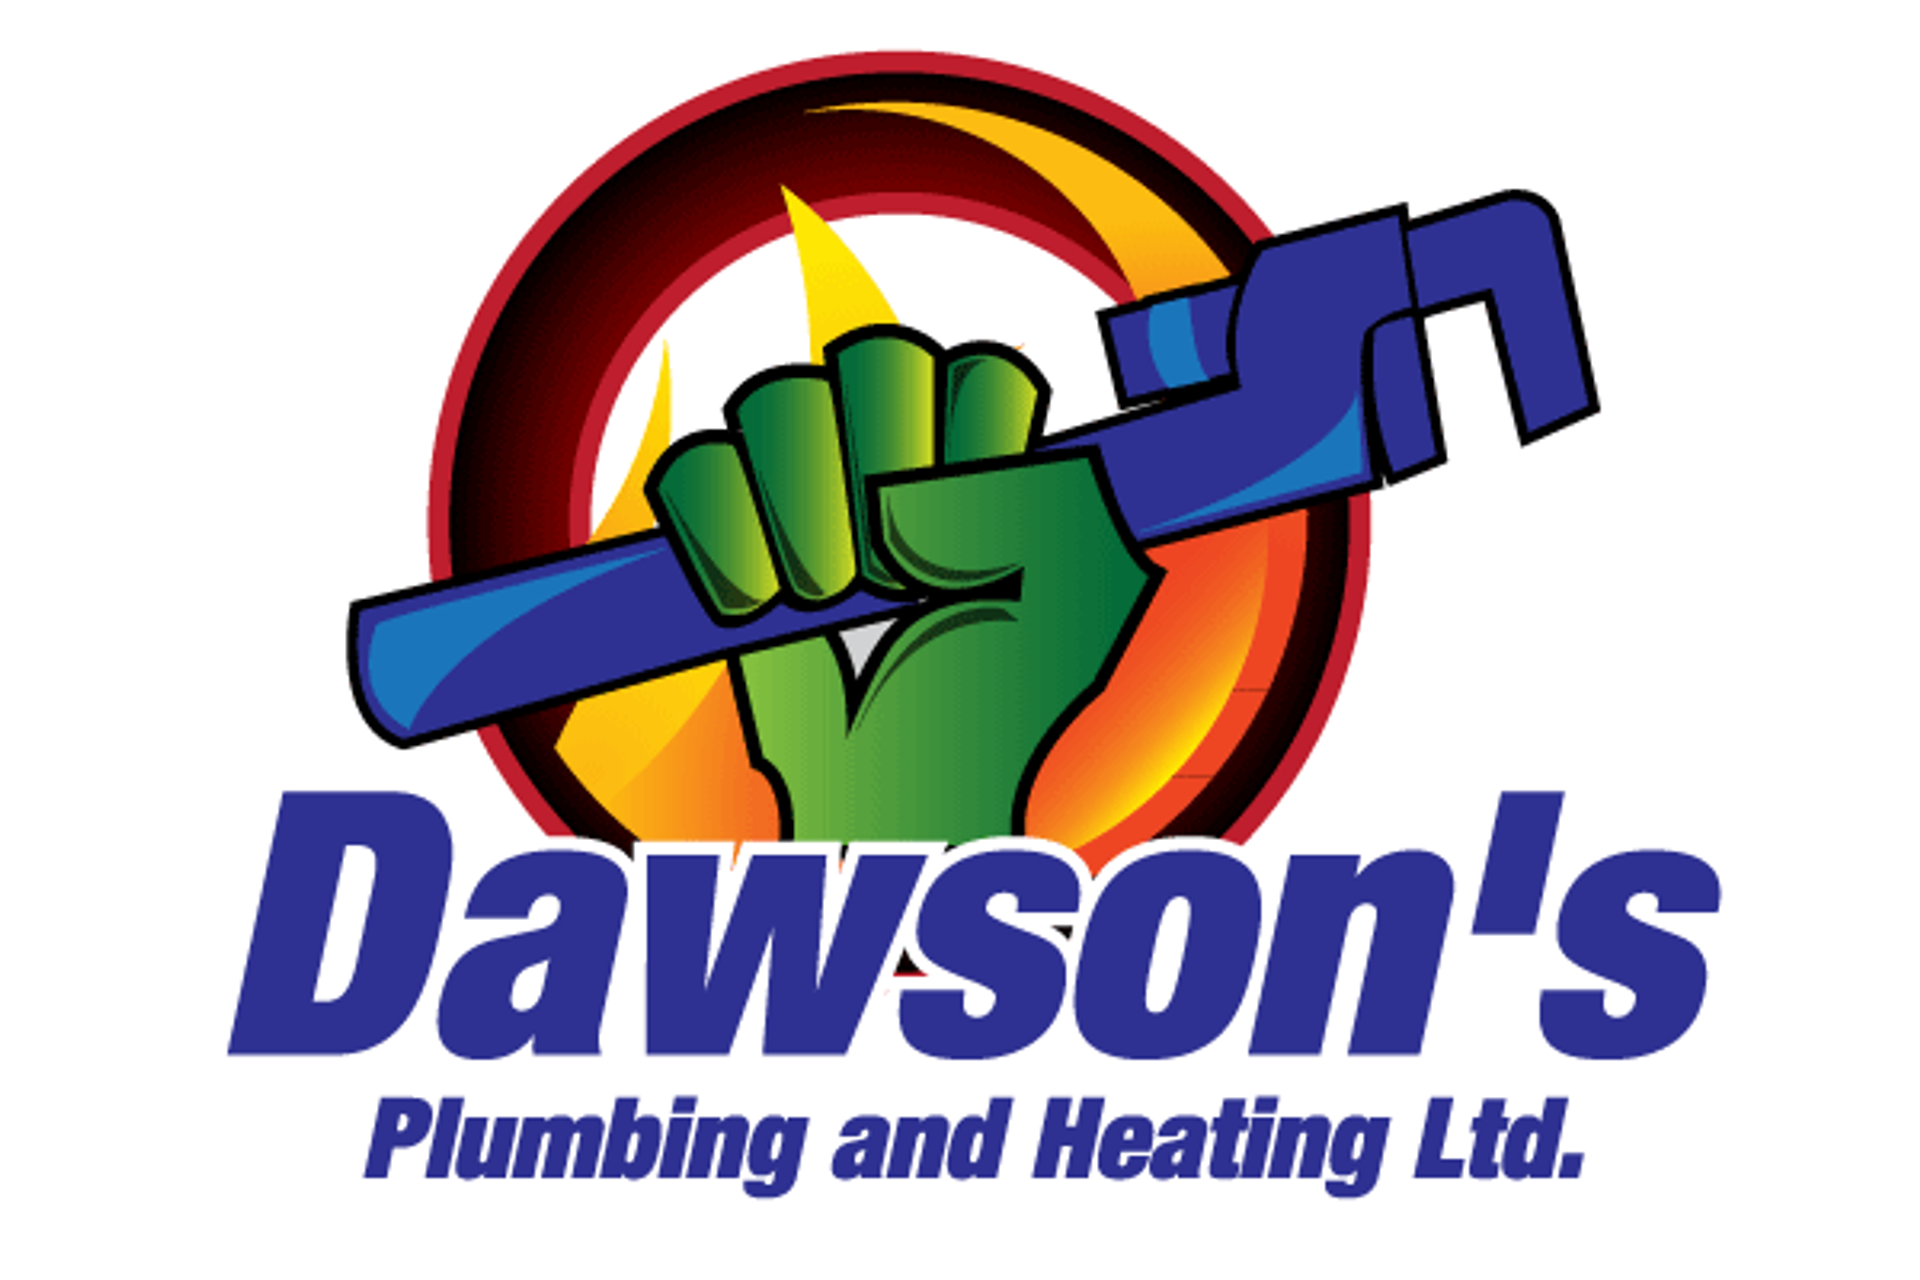 Dawson's Plumbing and Heating Ltd.